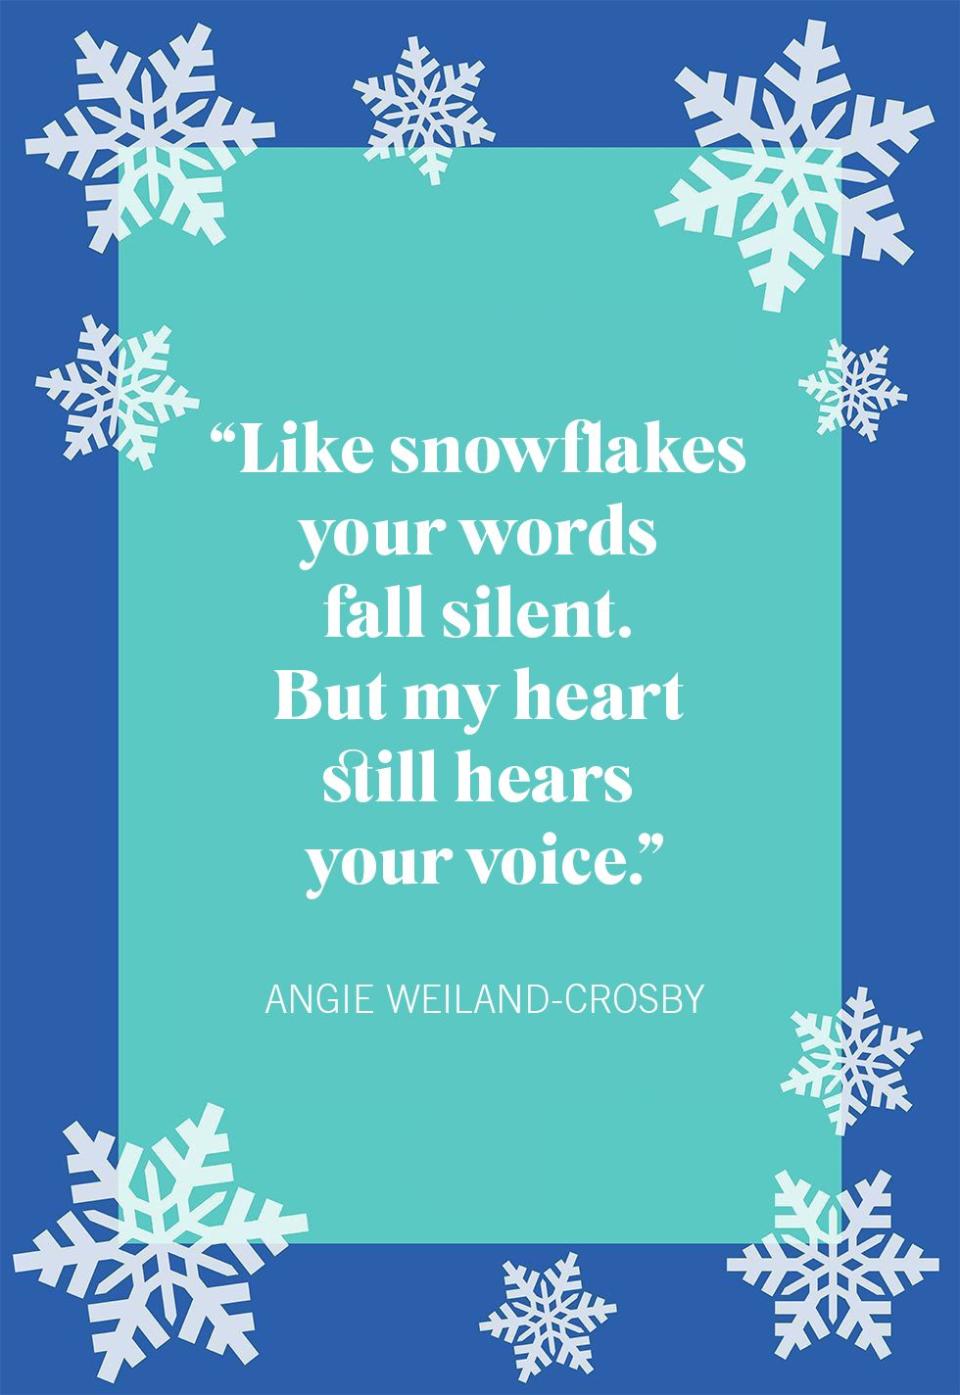 Angie Weiland-Crosby